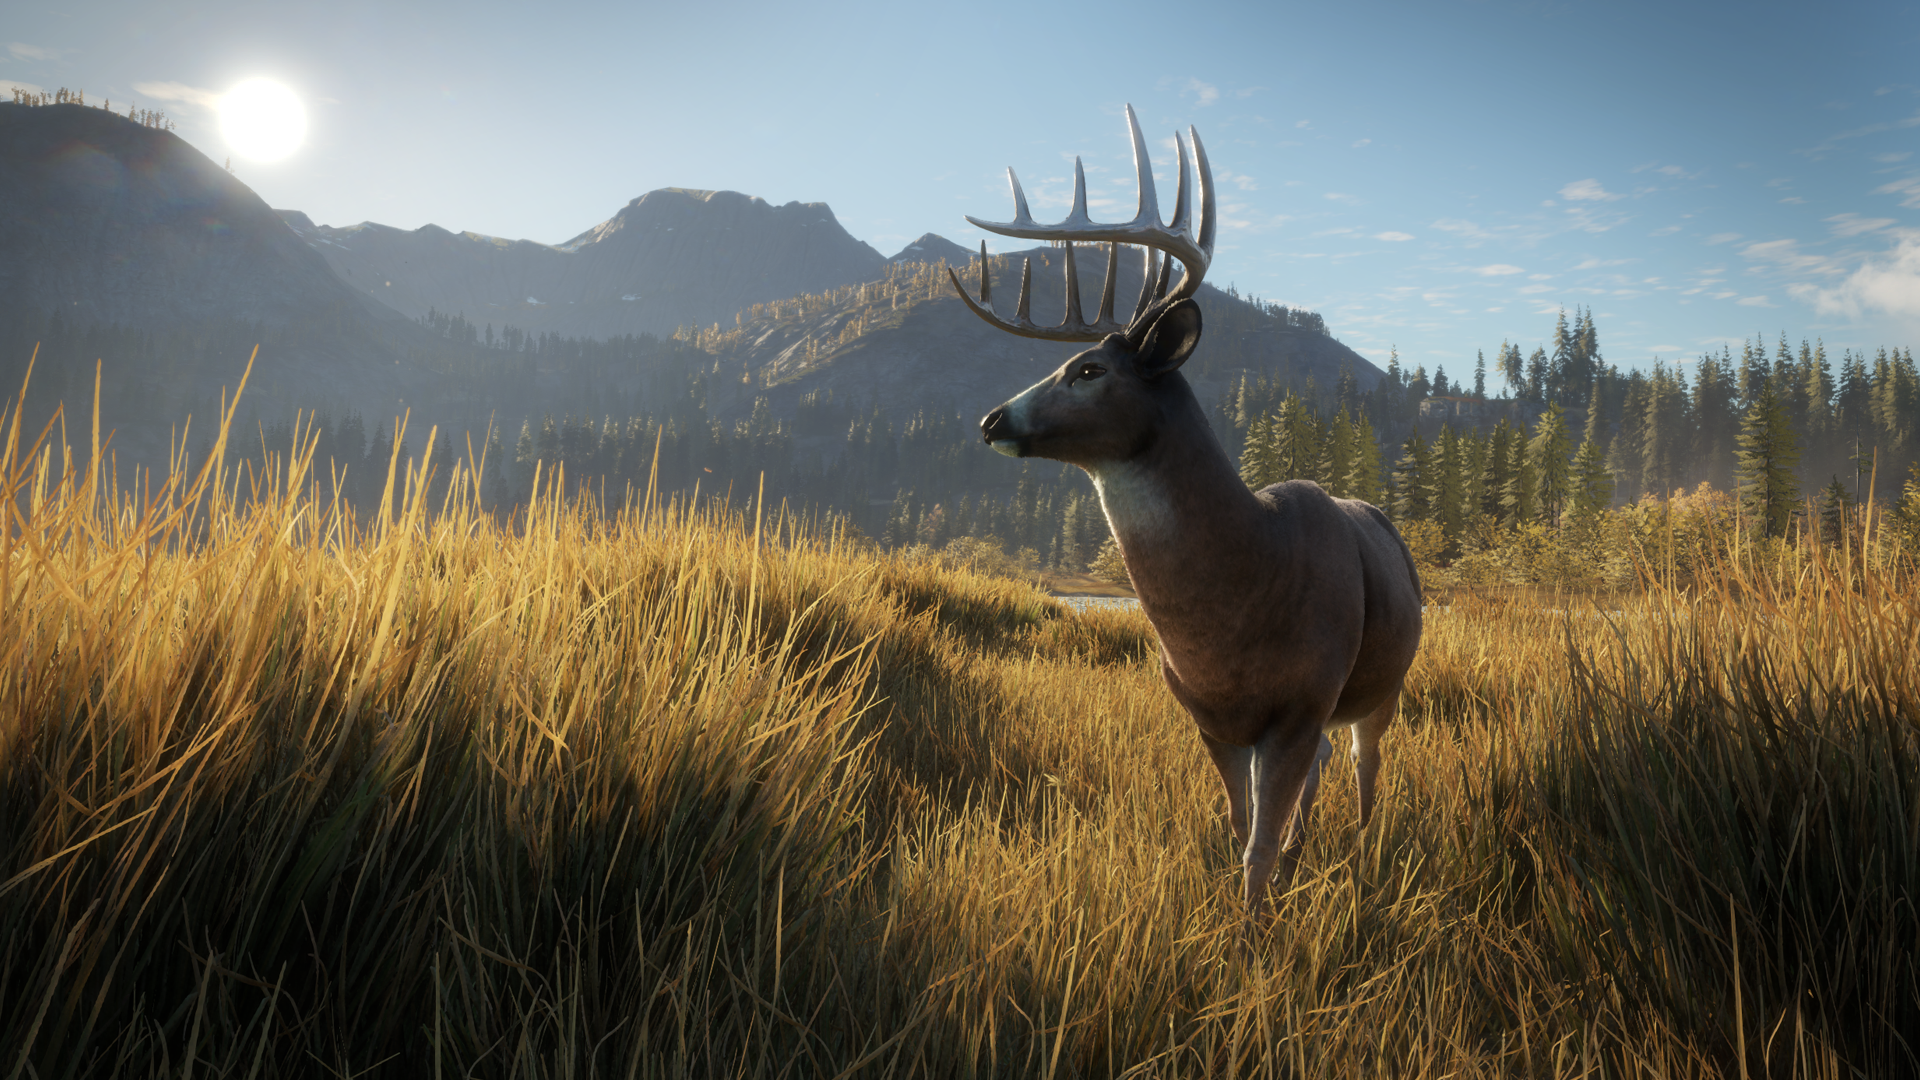 the hunter call of the wild steam diamond deer